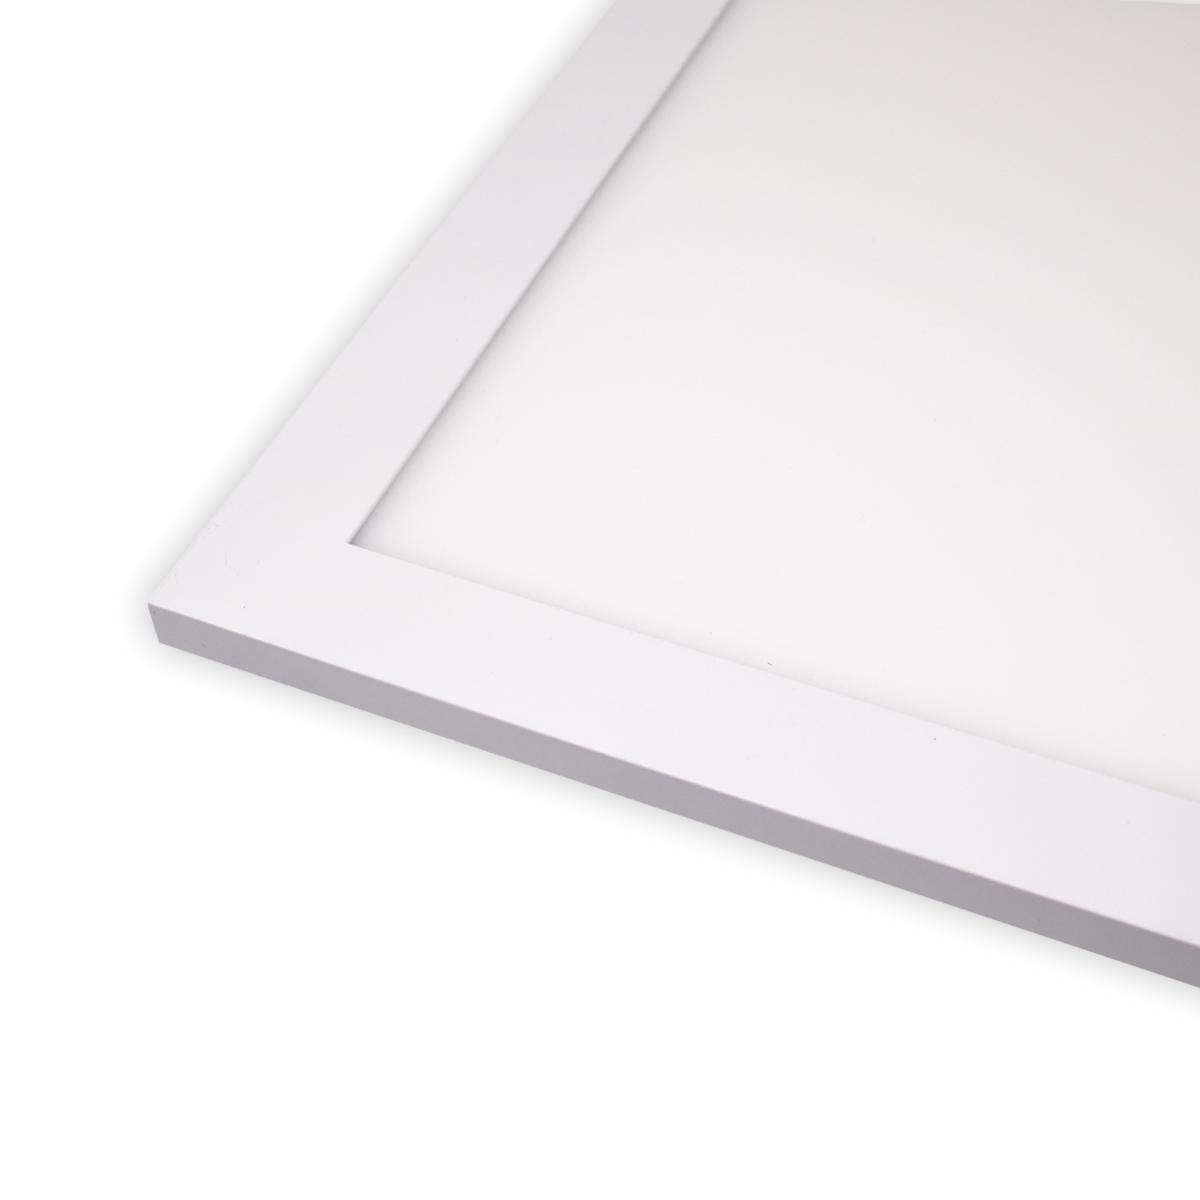 RGB+CCT LED Panel 120x15cm inkl. MiBoxer Smarthomesteuerung 24W 24V Rahmen weiß - Panelmontage:  Deckenhalterung Clips